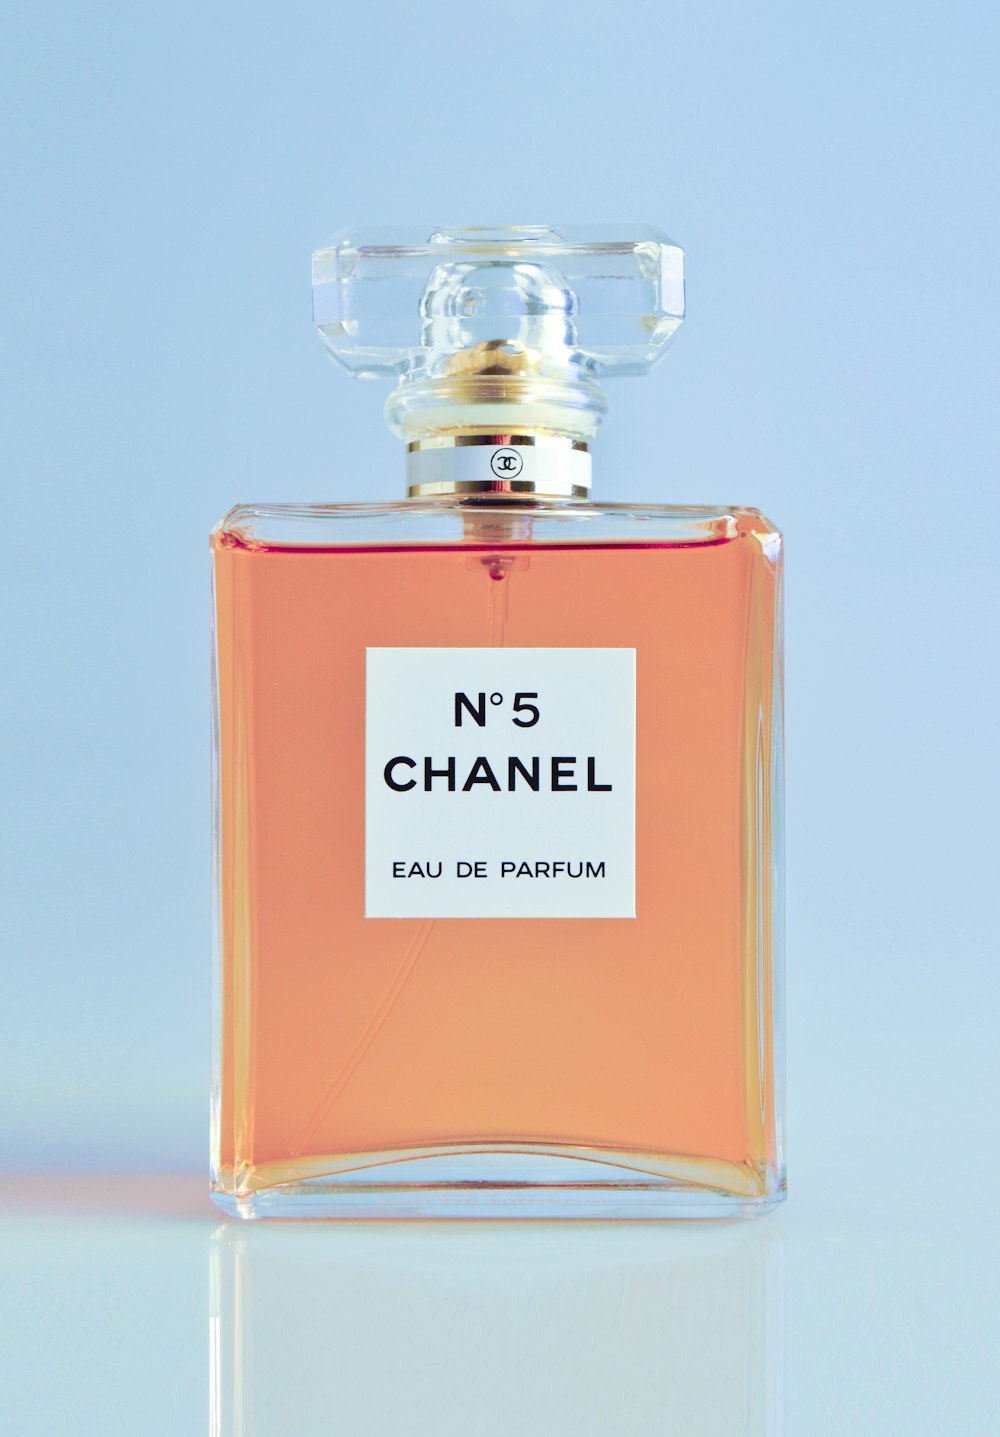 30+ Free Chanel & Perfume Images - Pixabay